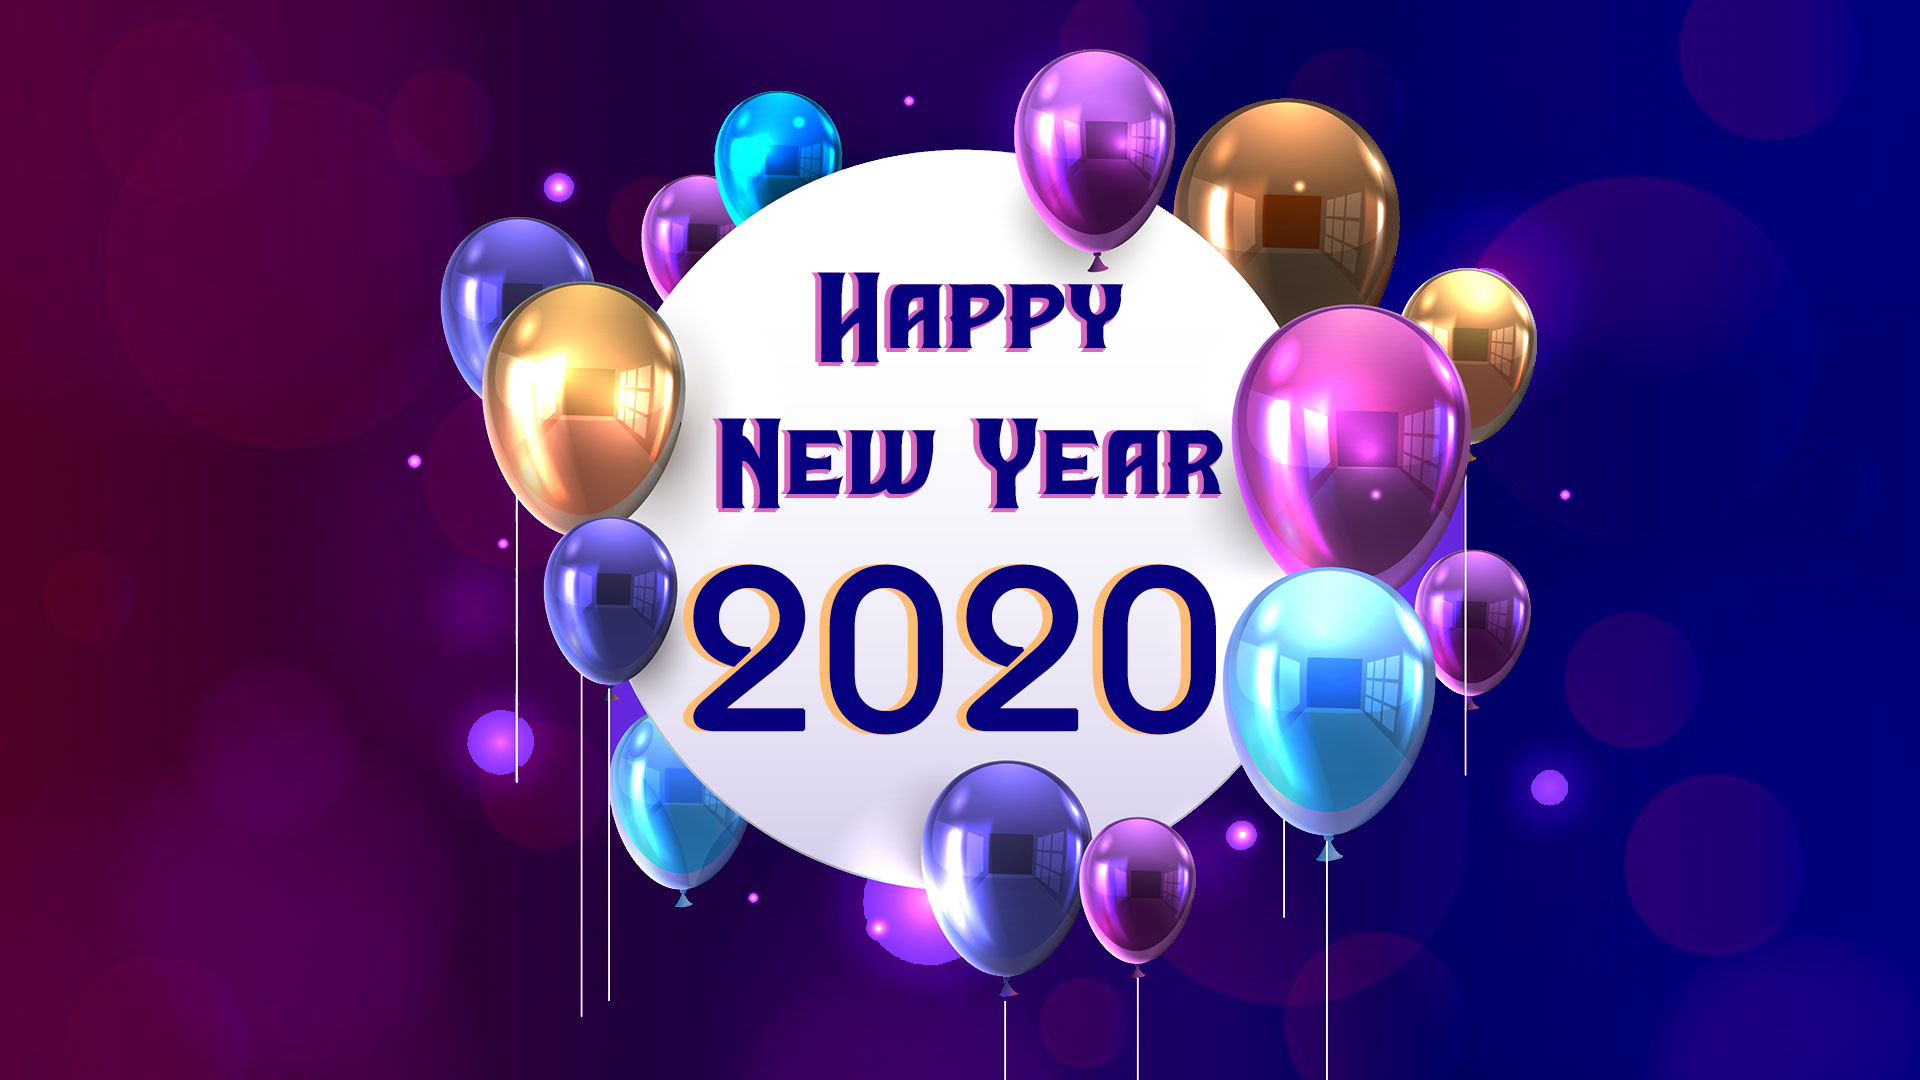 Happy New Year Greetings - Hd Wallpaper 2020 - HD Wallpaper 